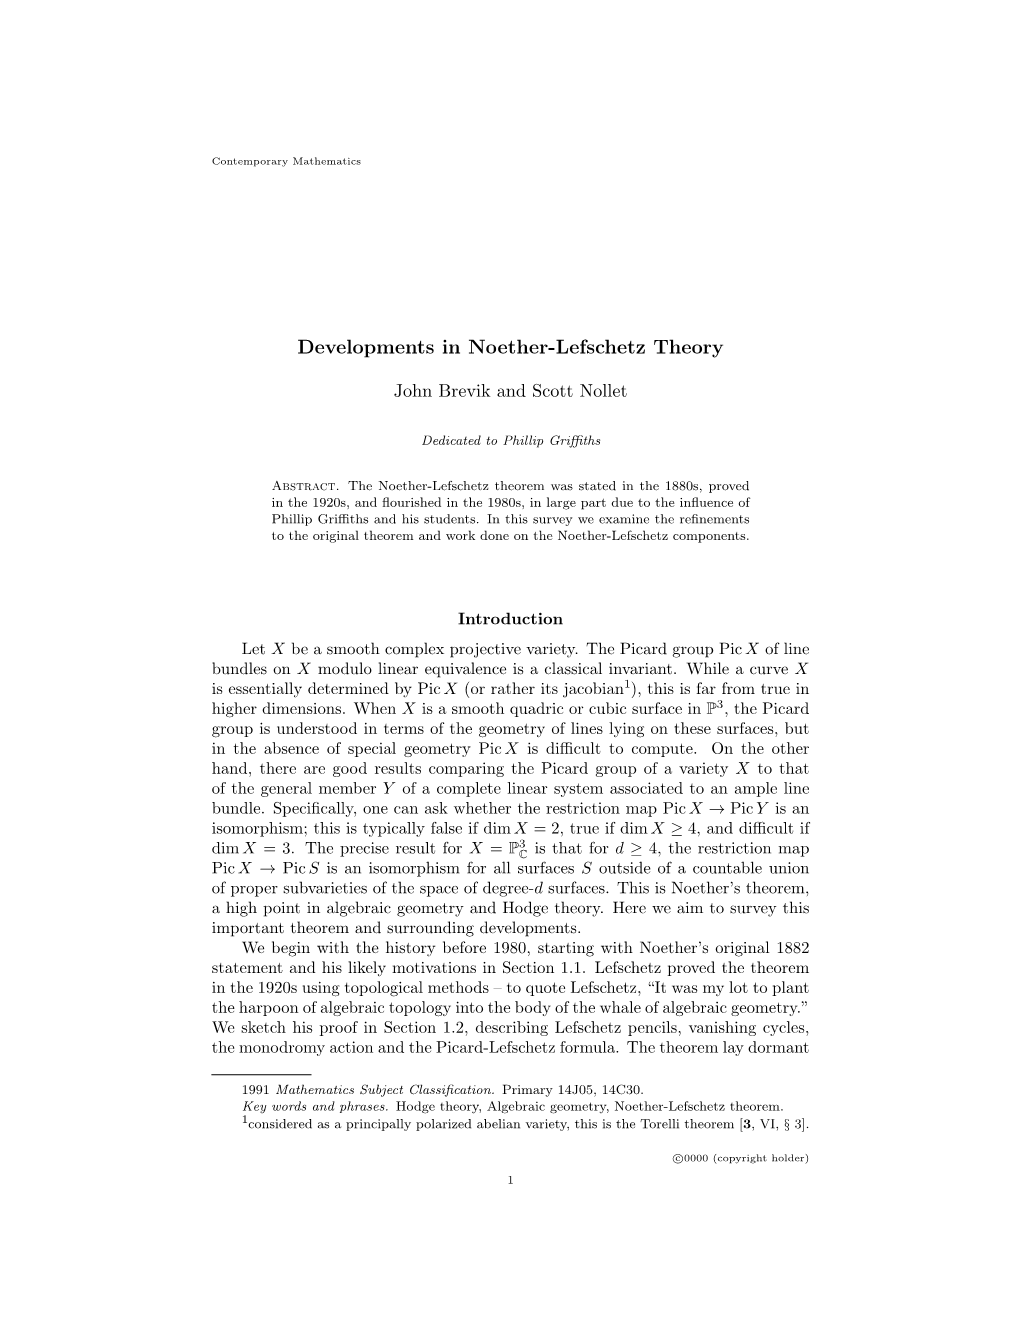 Developments in Noether-Lefschetz Theory